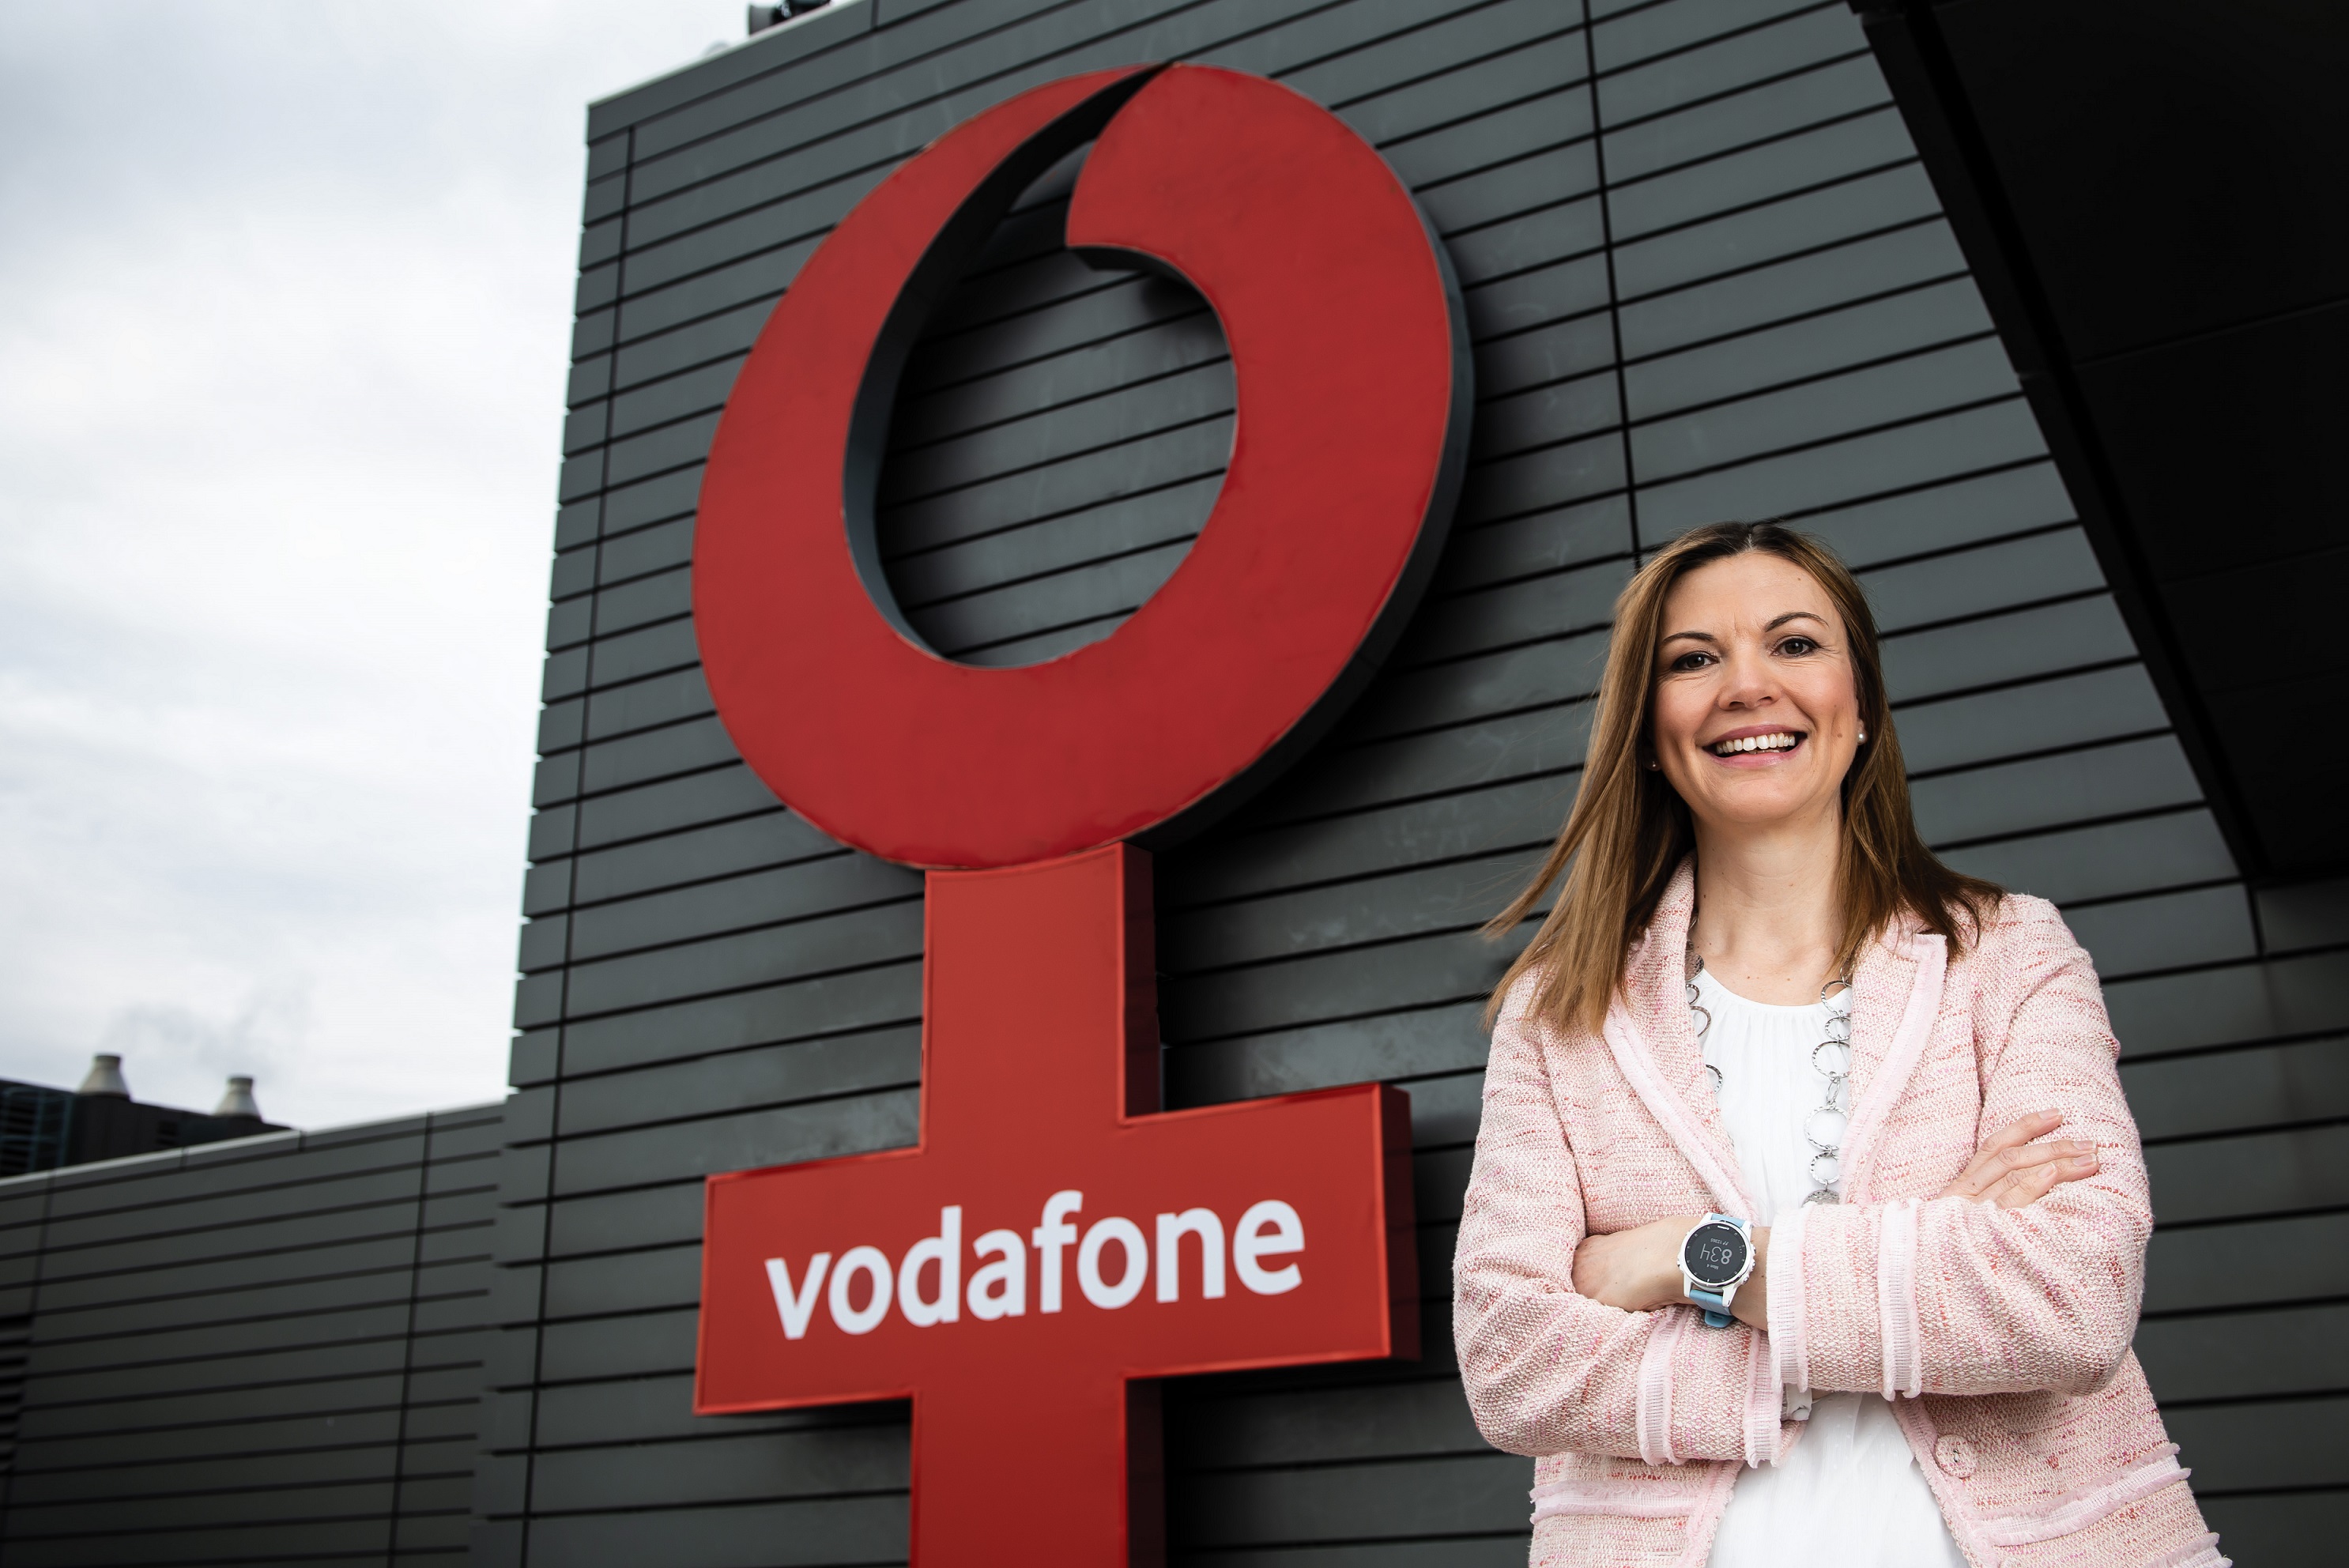 Vodafone creates organization for women working in tech